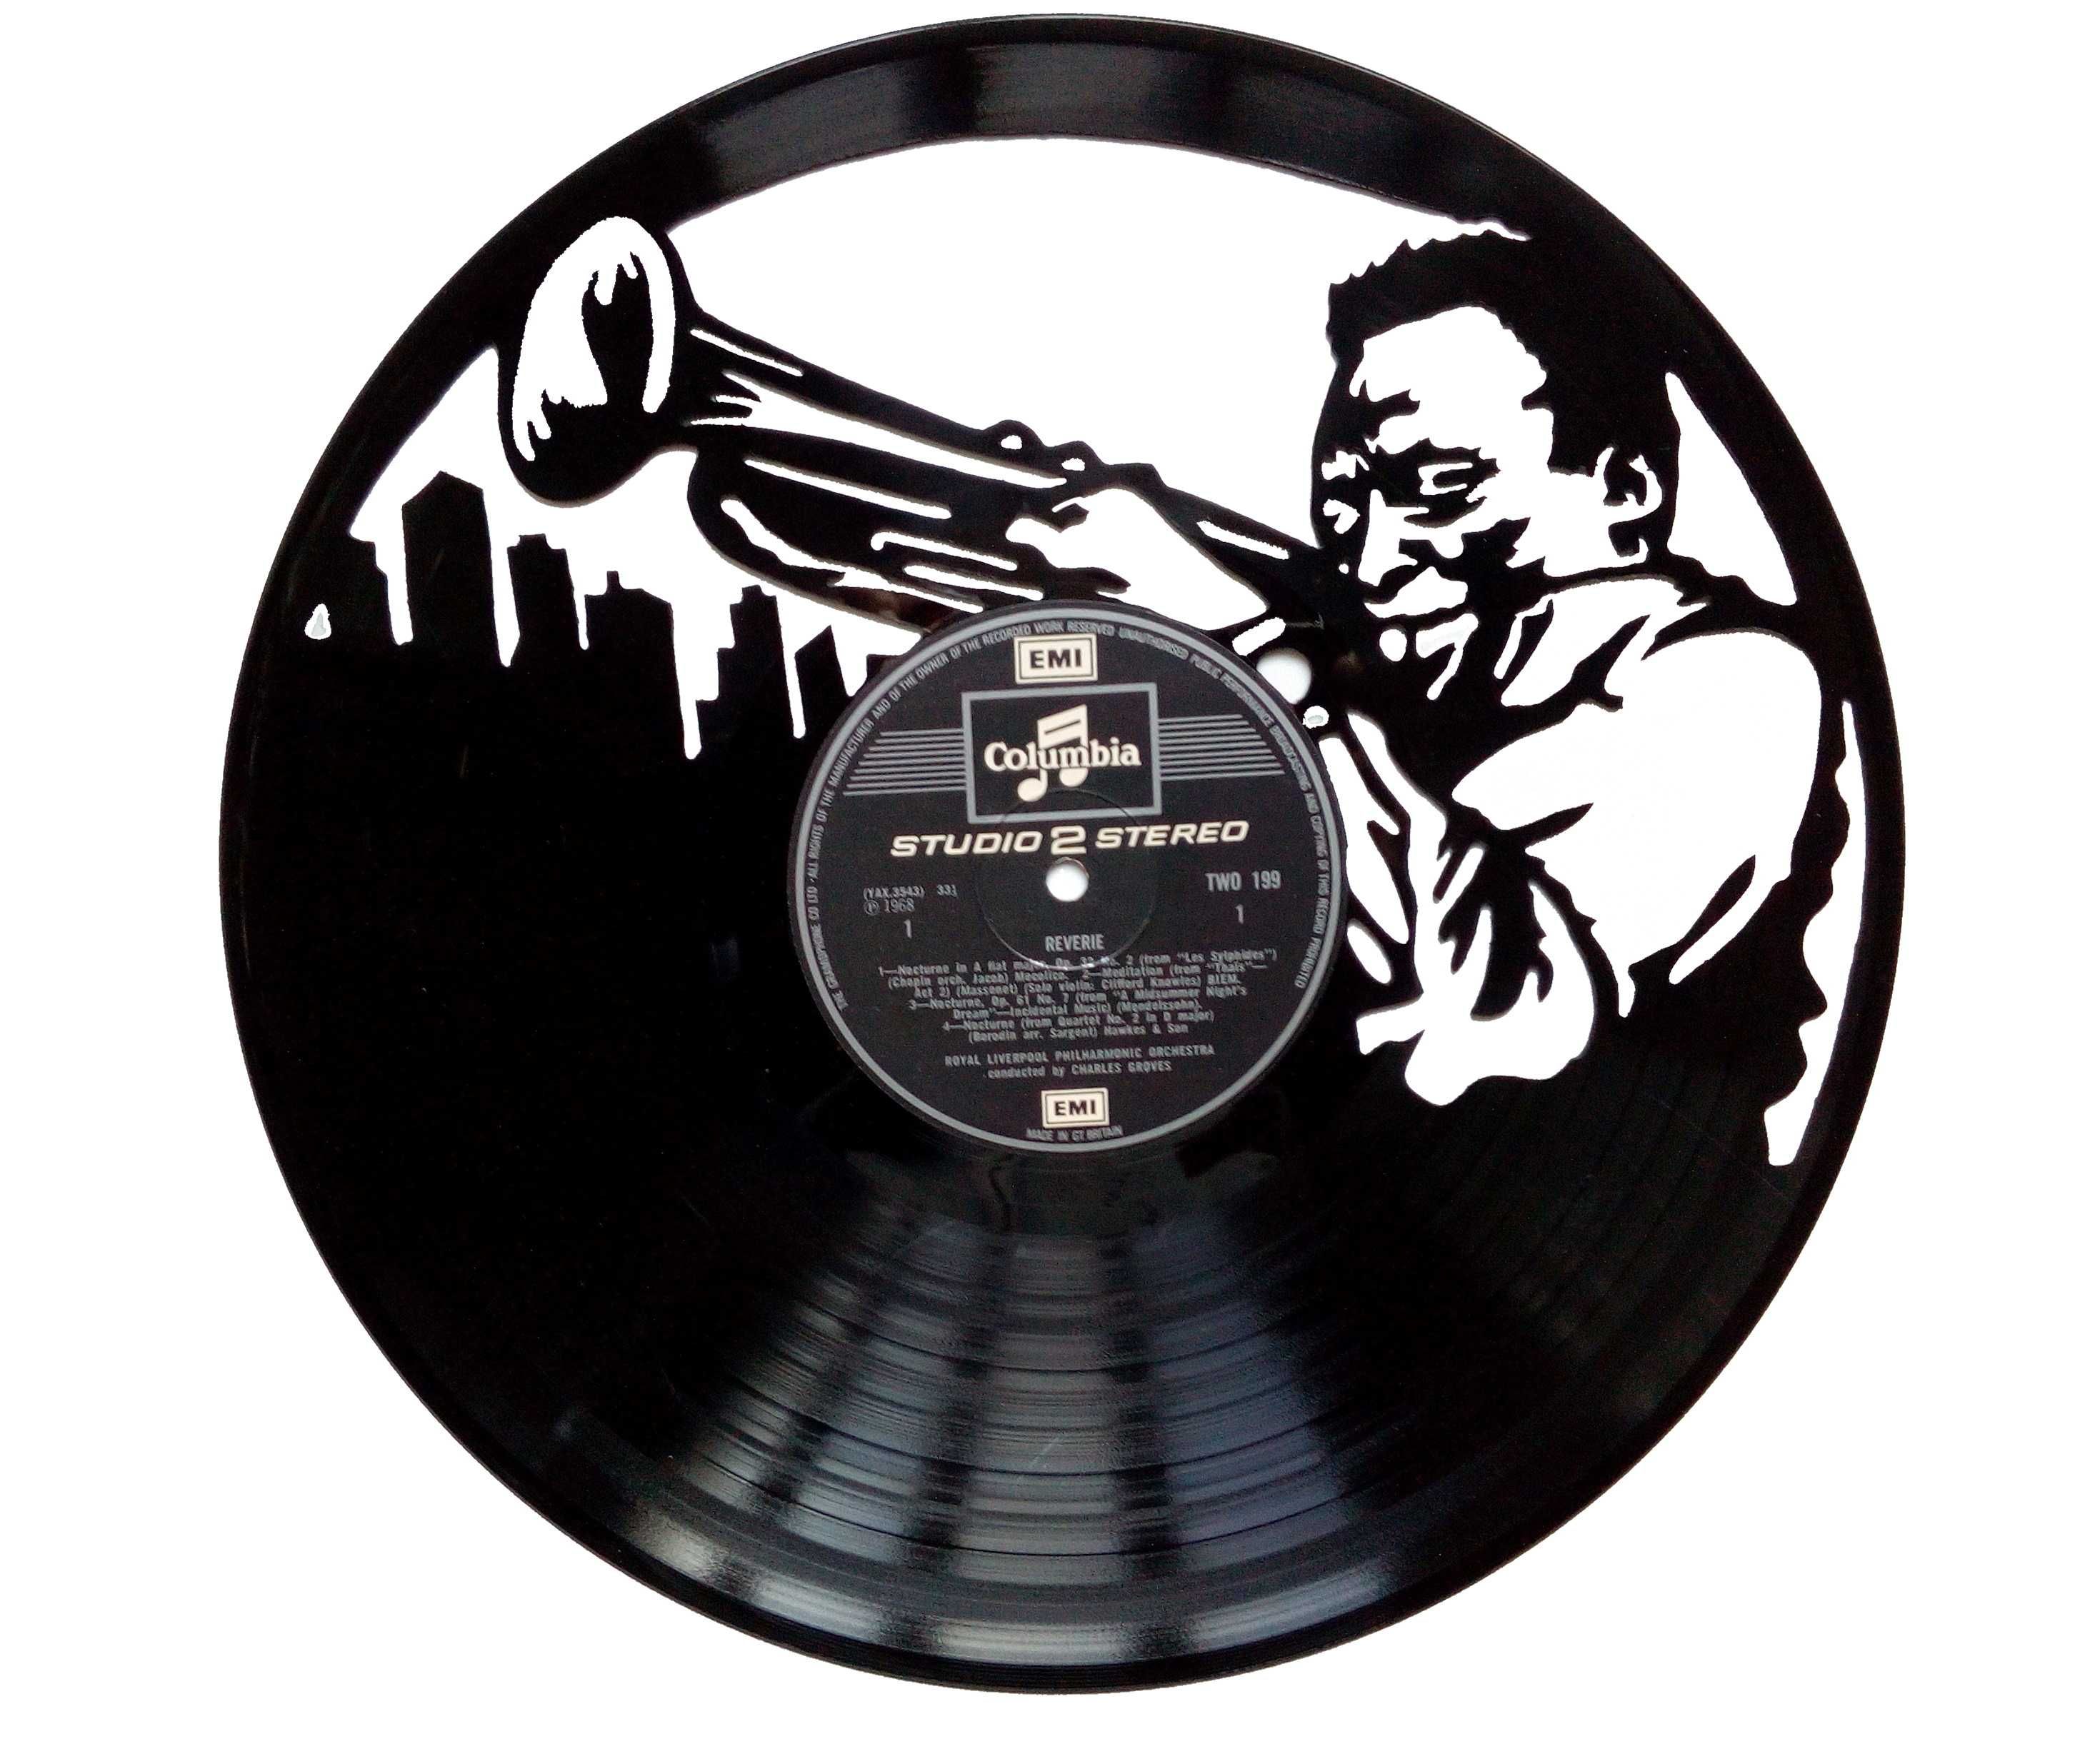 Silhueta decorativa Miles Davis feita de um disco de vinil LP